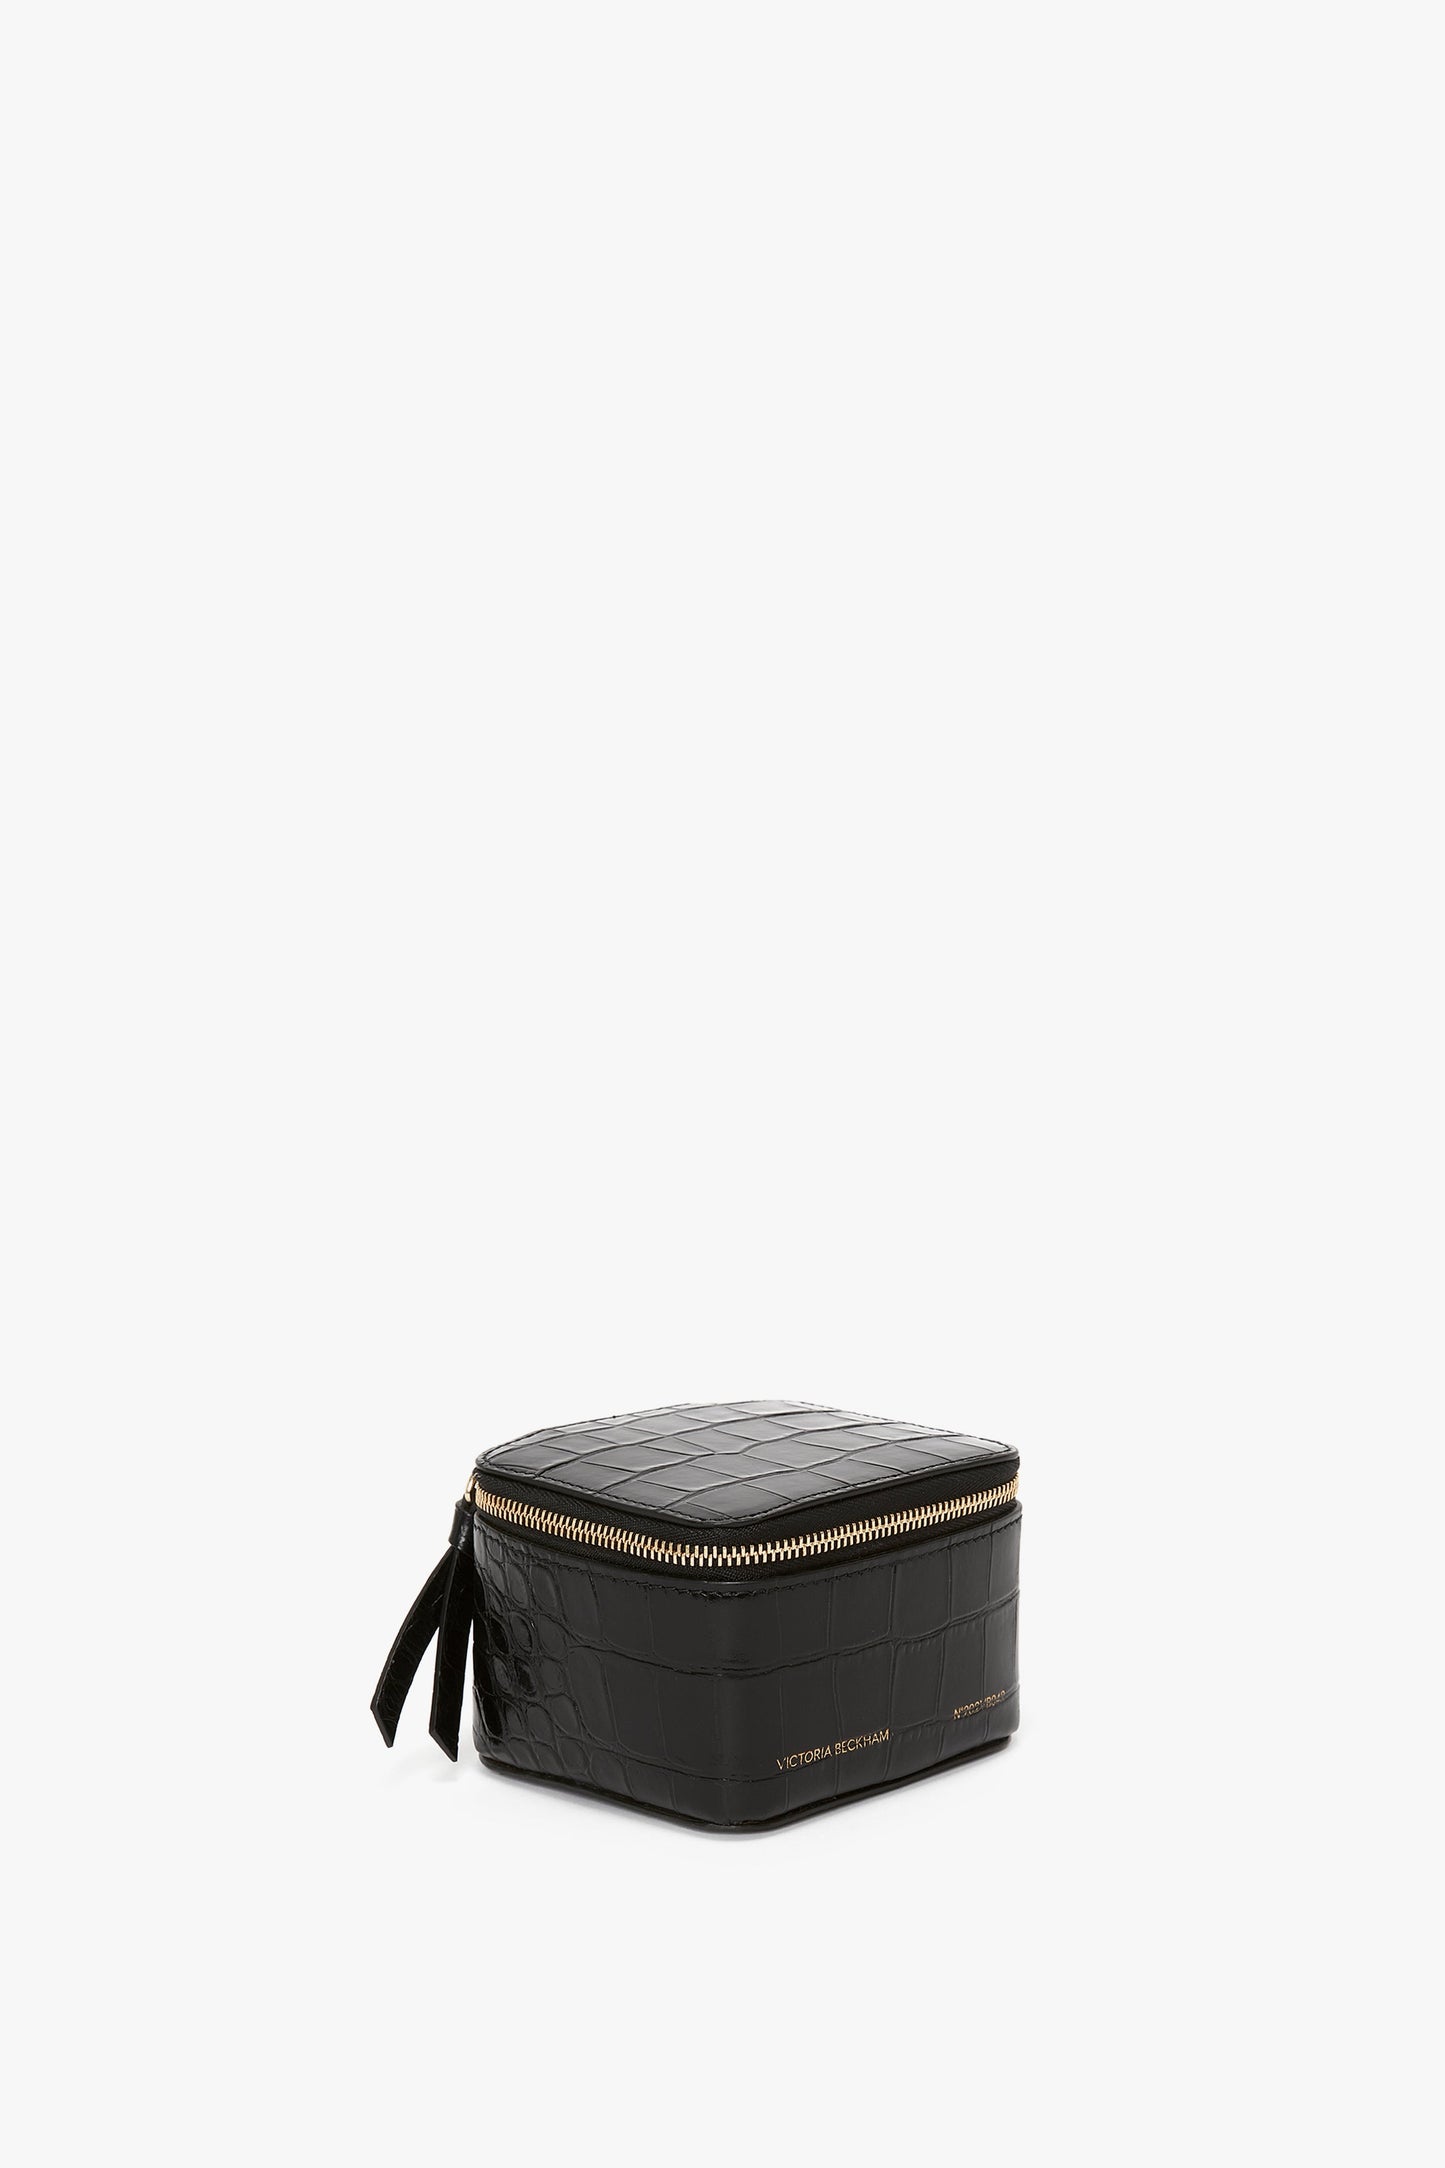 Jewellery Box In Black Croc-Effect Leather